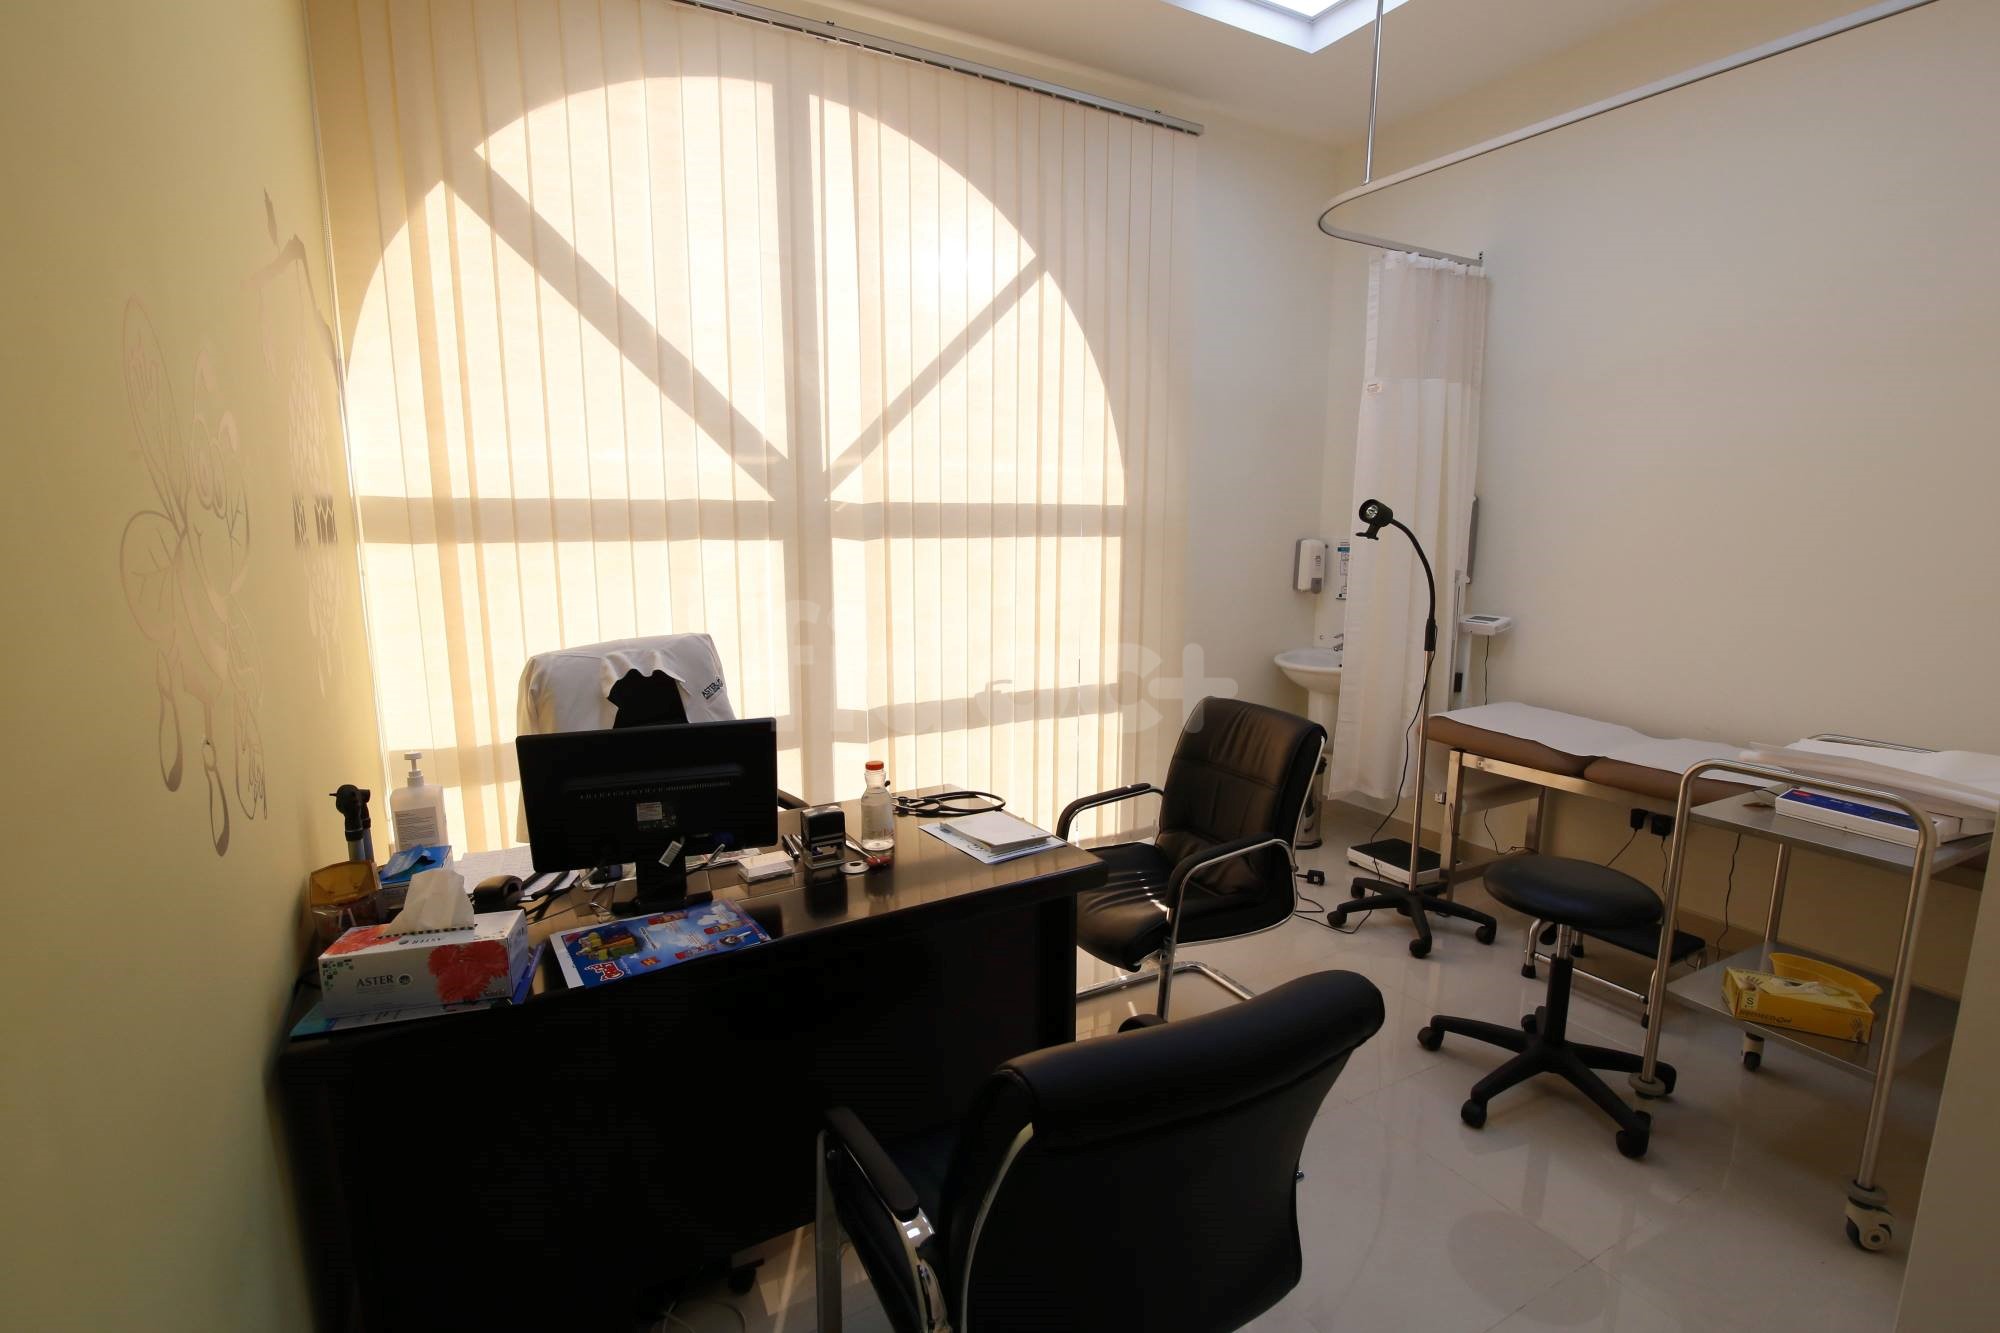 Aster Clinic - Al Khail, Dubai